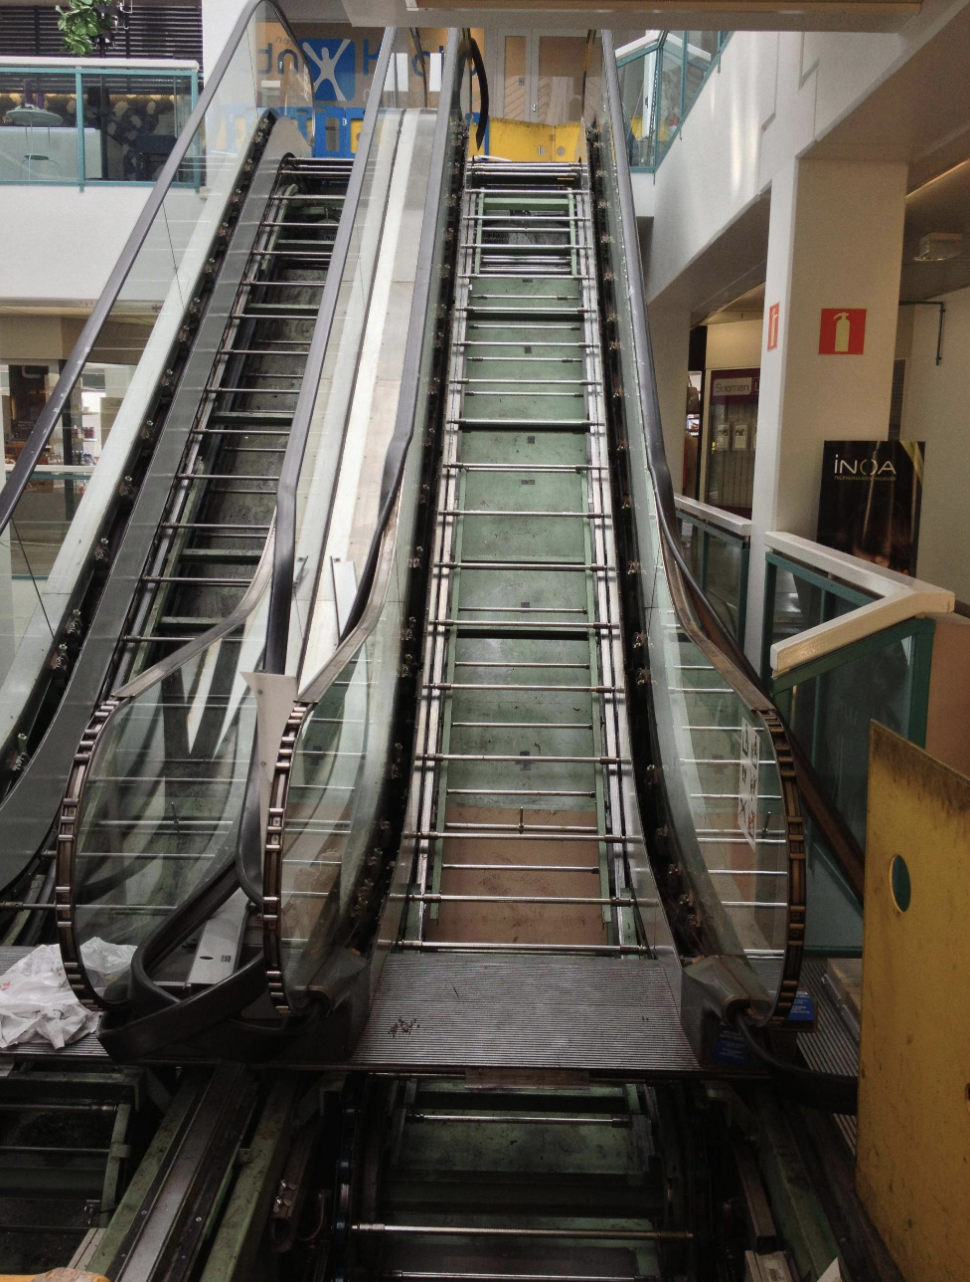 metal rods going across the escalator